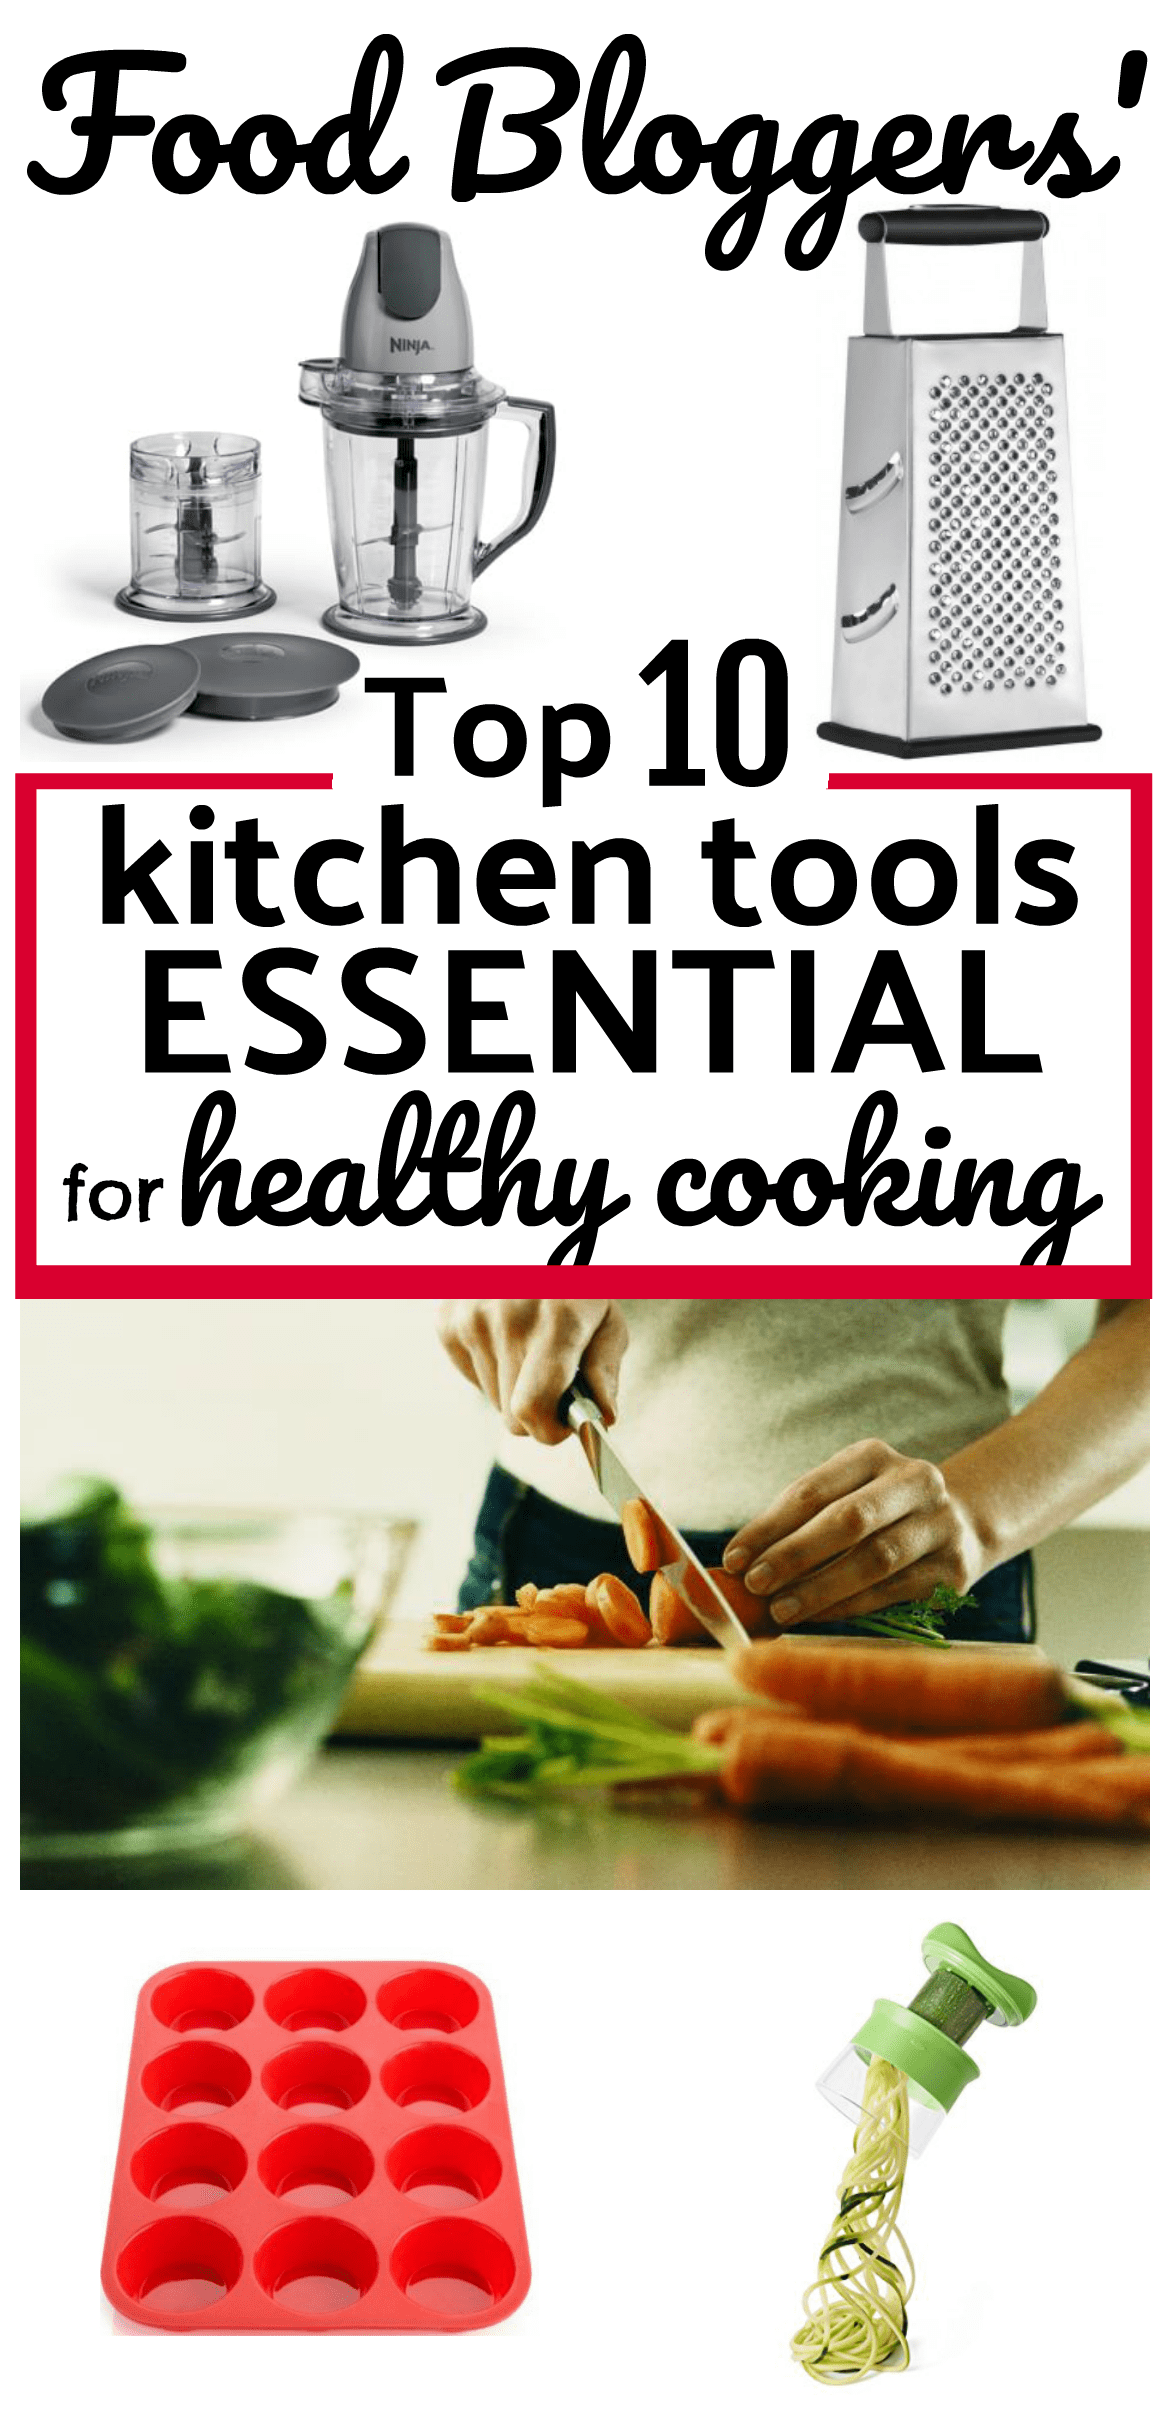 Top 10 Kitchen Gadgets  Cooking gadgets, Kitchen gadgets, Food